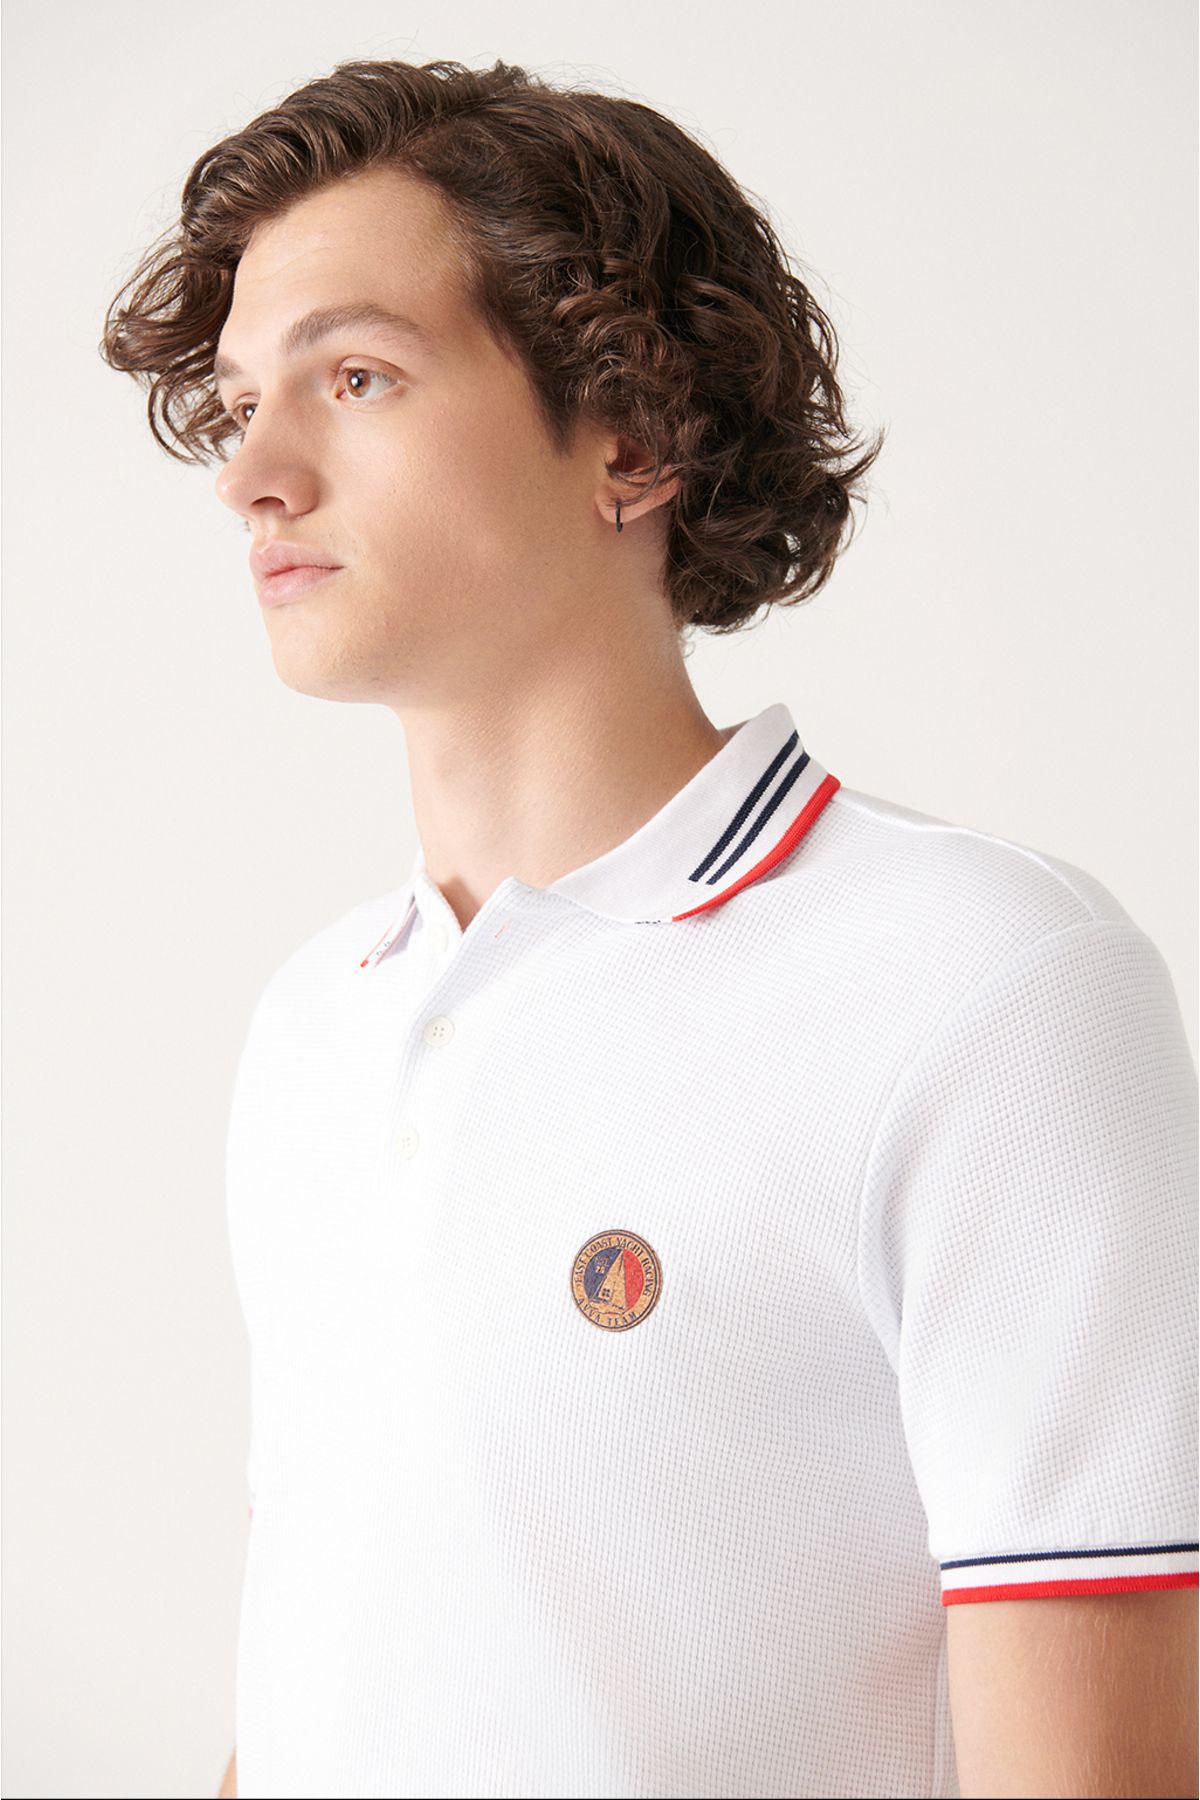 Avva تی شرت یقه پولو برش معمولی مردانه سفید 100% نخی با بافت آجدار دریایی چاپ استاندارد متناسب